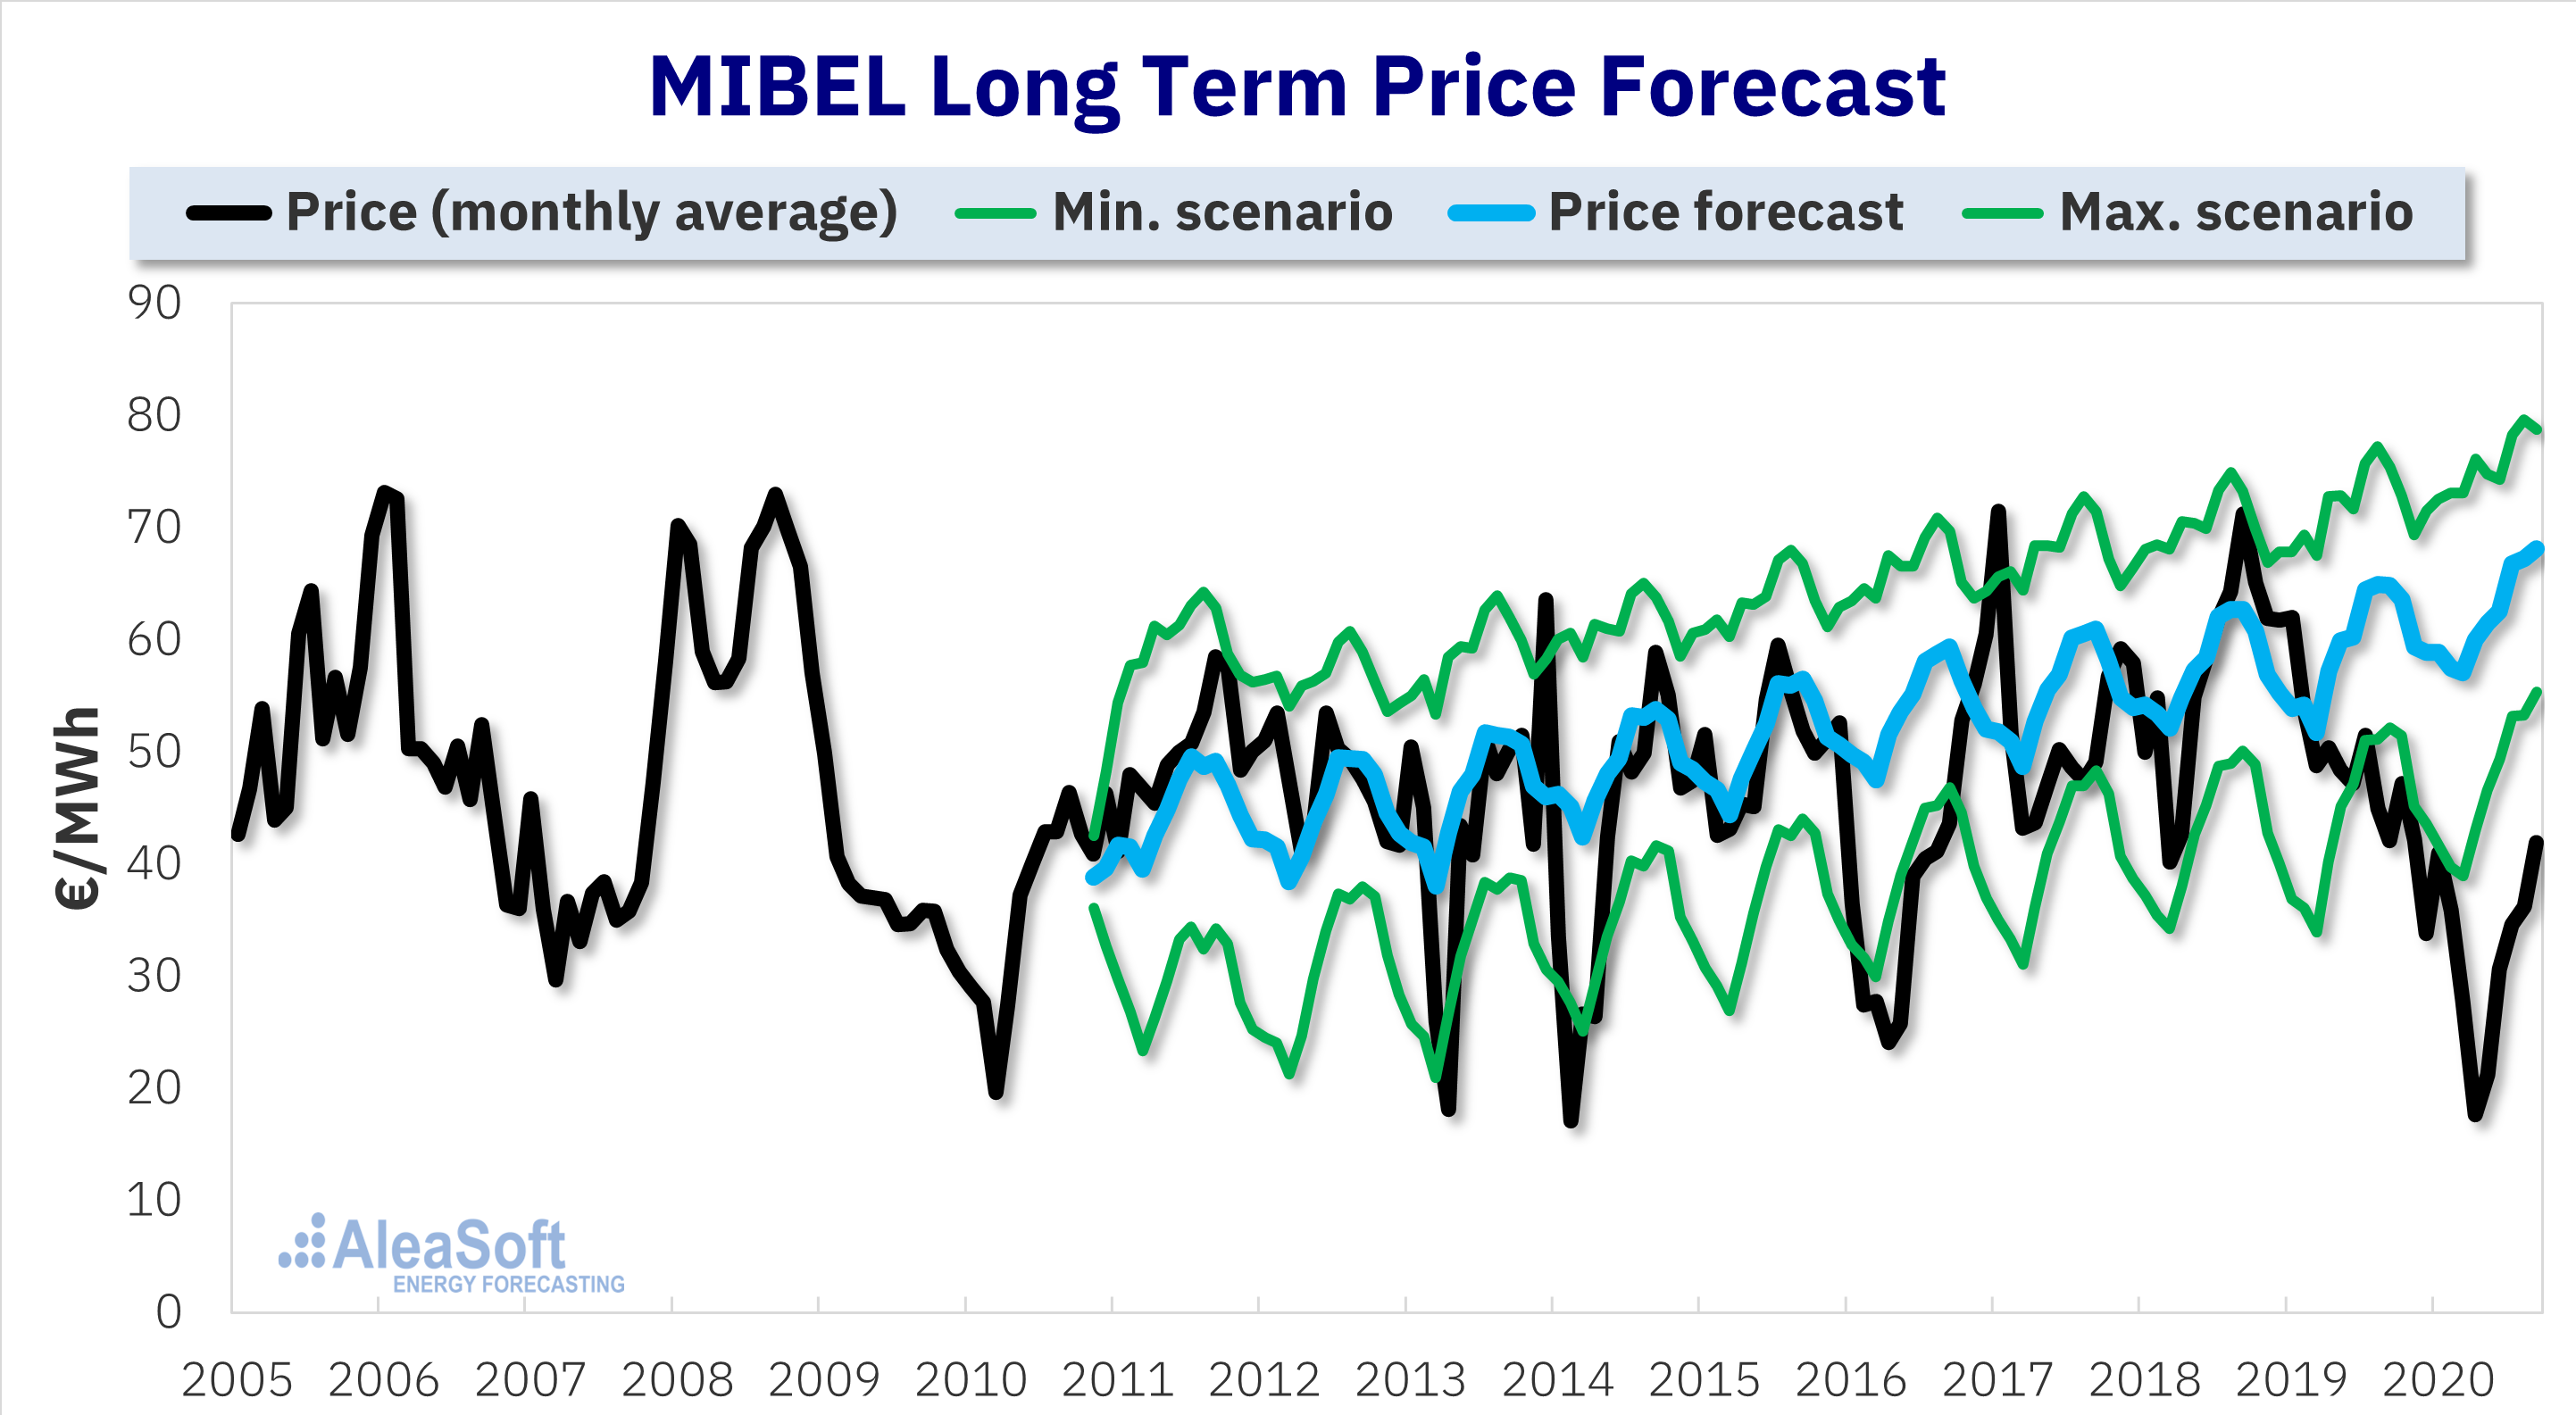 AleaSoft - MIBEL long term price forecast